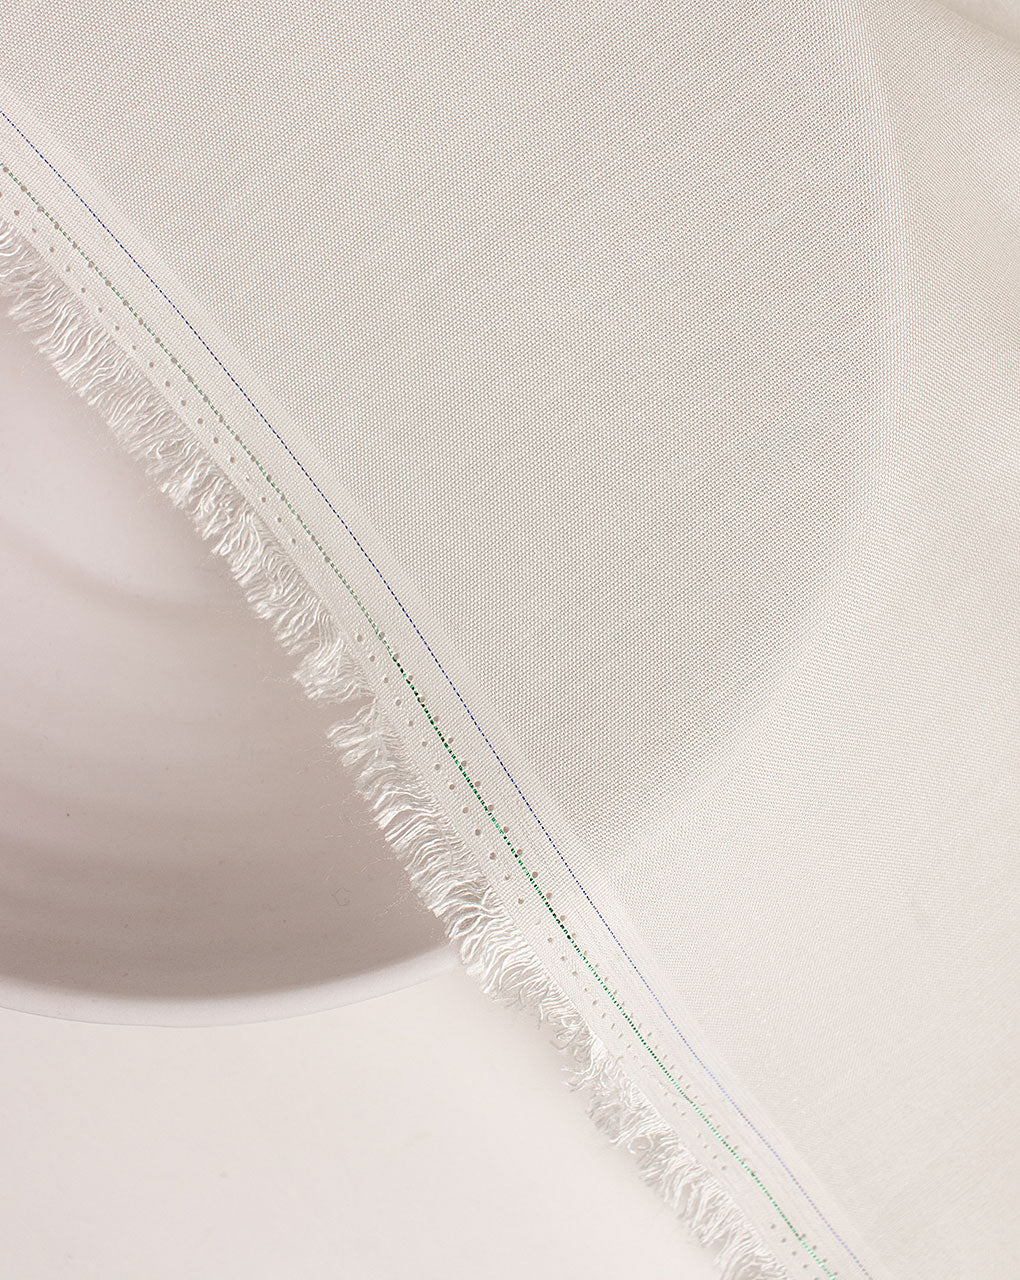 Dyeable Liva VFY Modal ( Muslin Japan Silk ) Fabric - Fabriclore.com